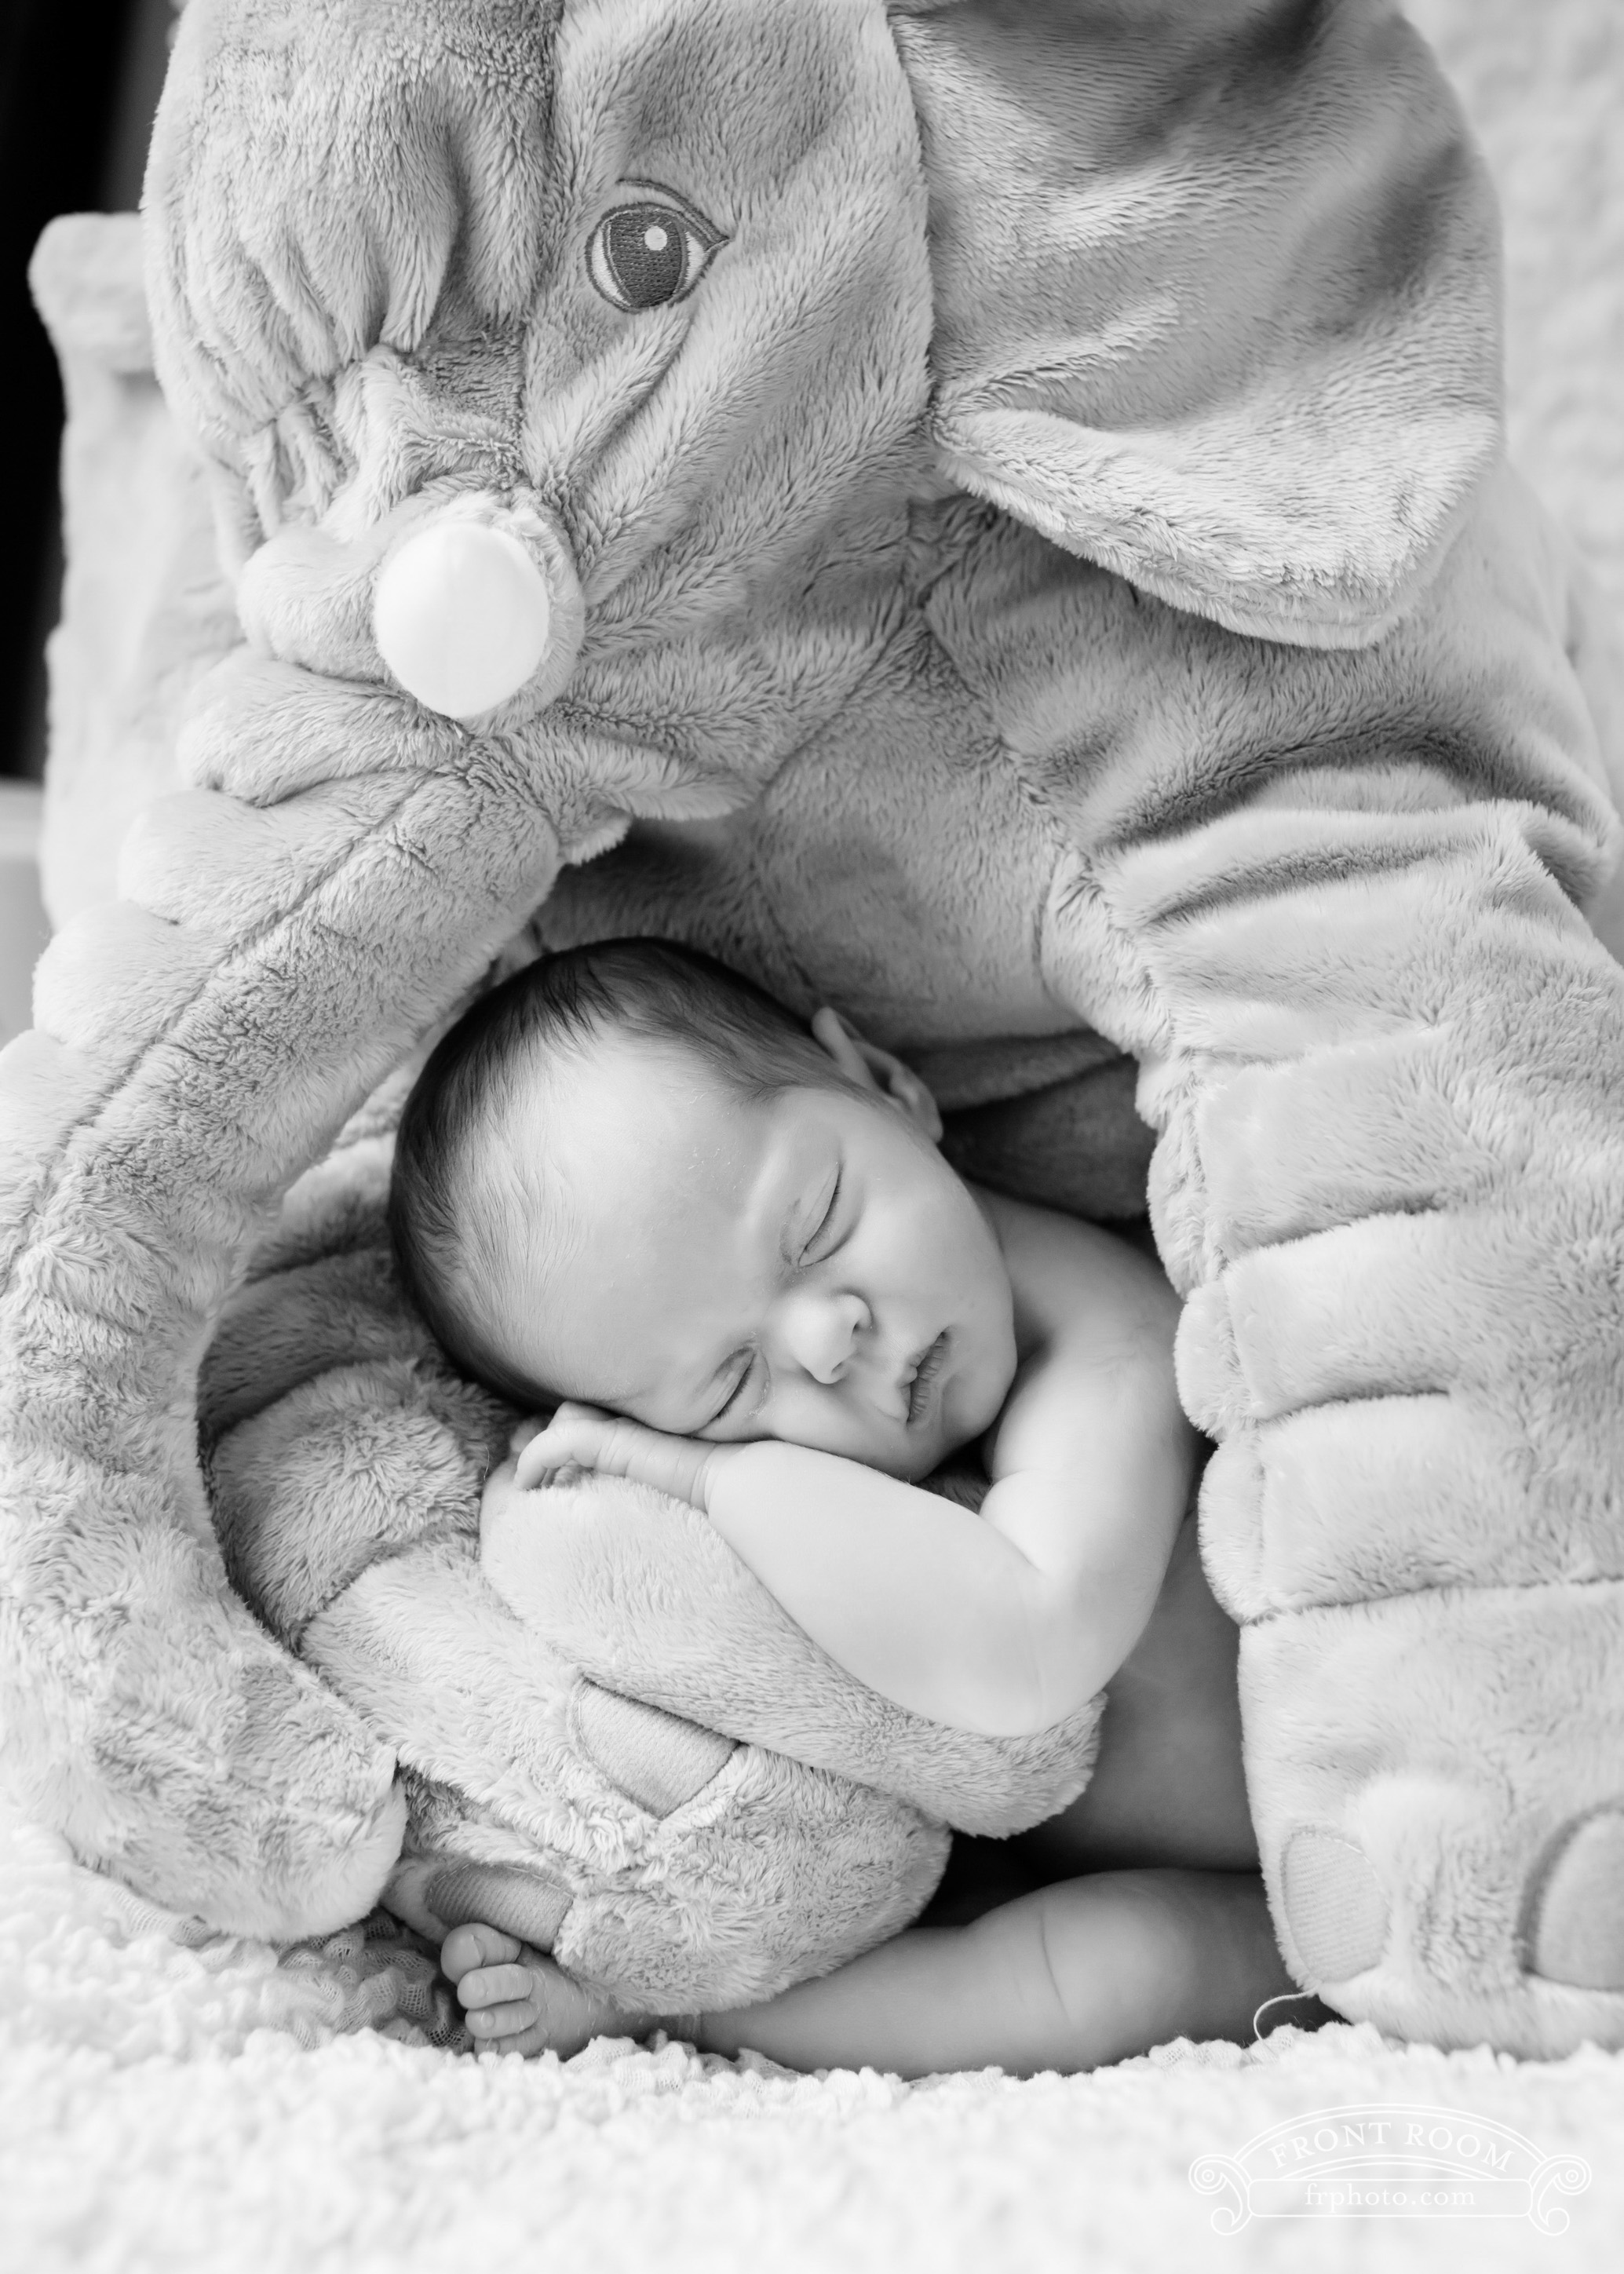 newborn baby with oversized stuffed elephant